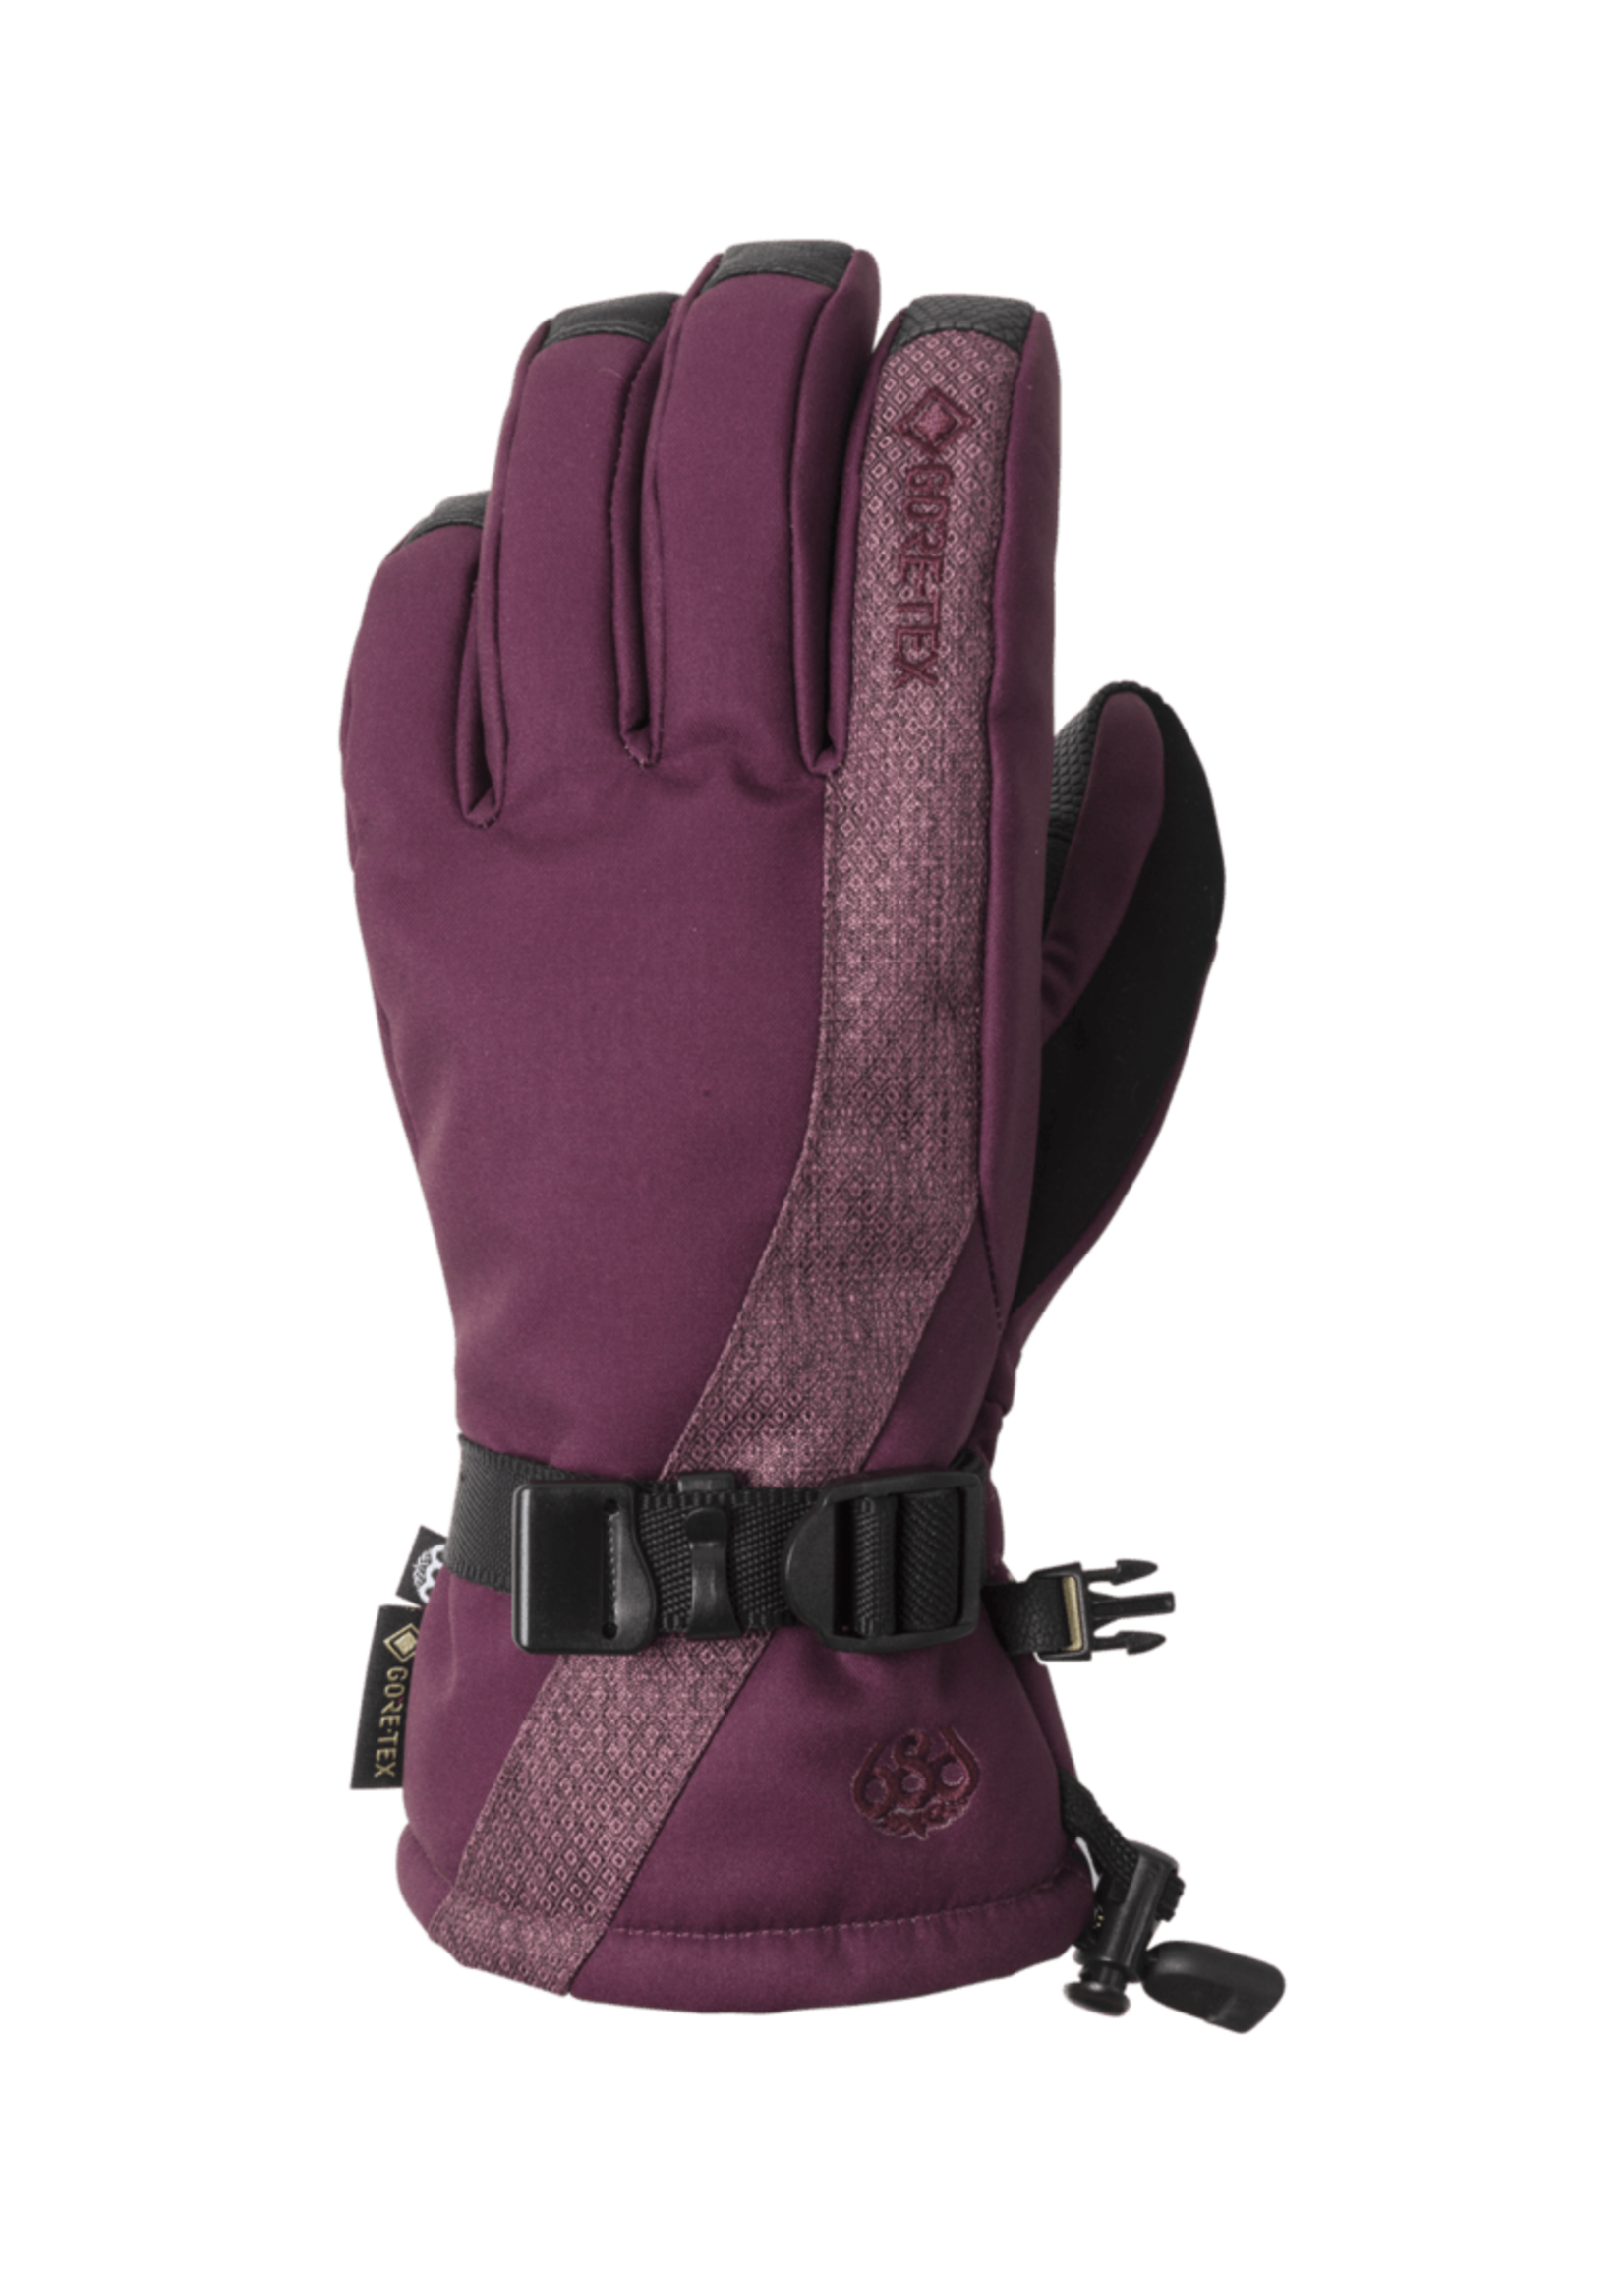 686 686 Womens Linear Glove